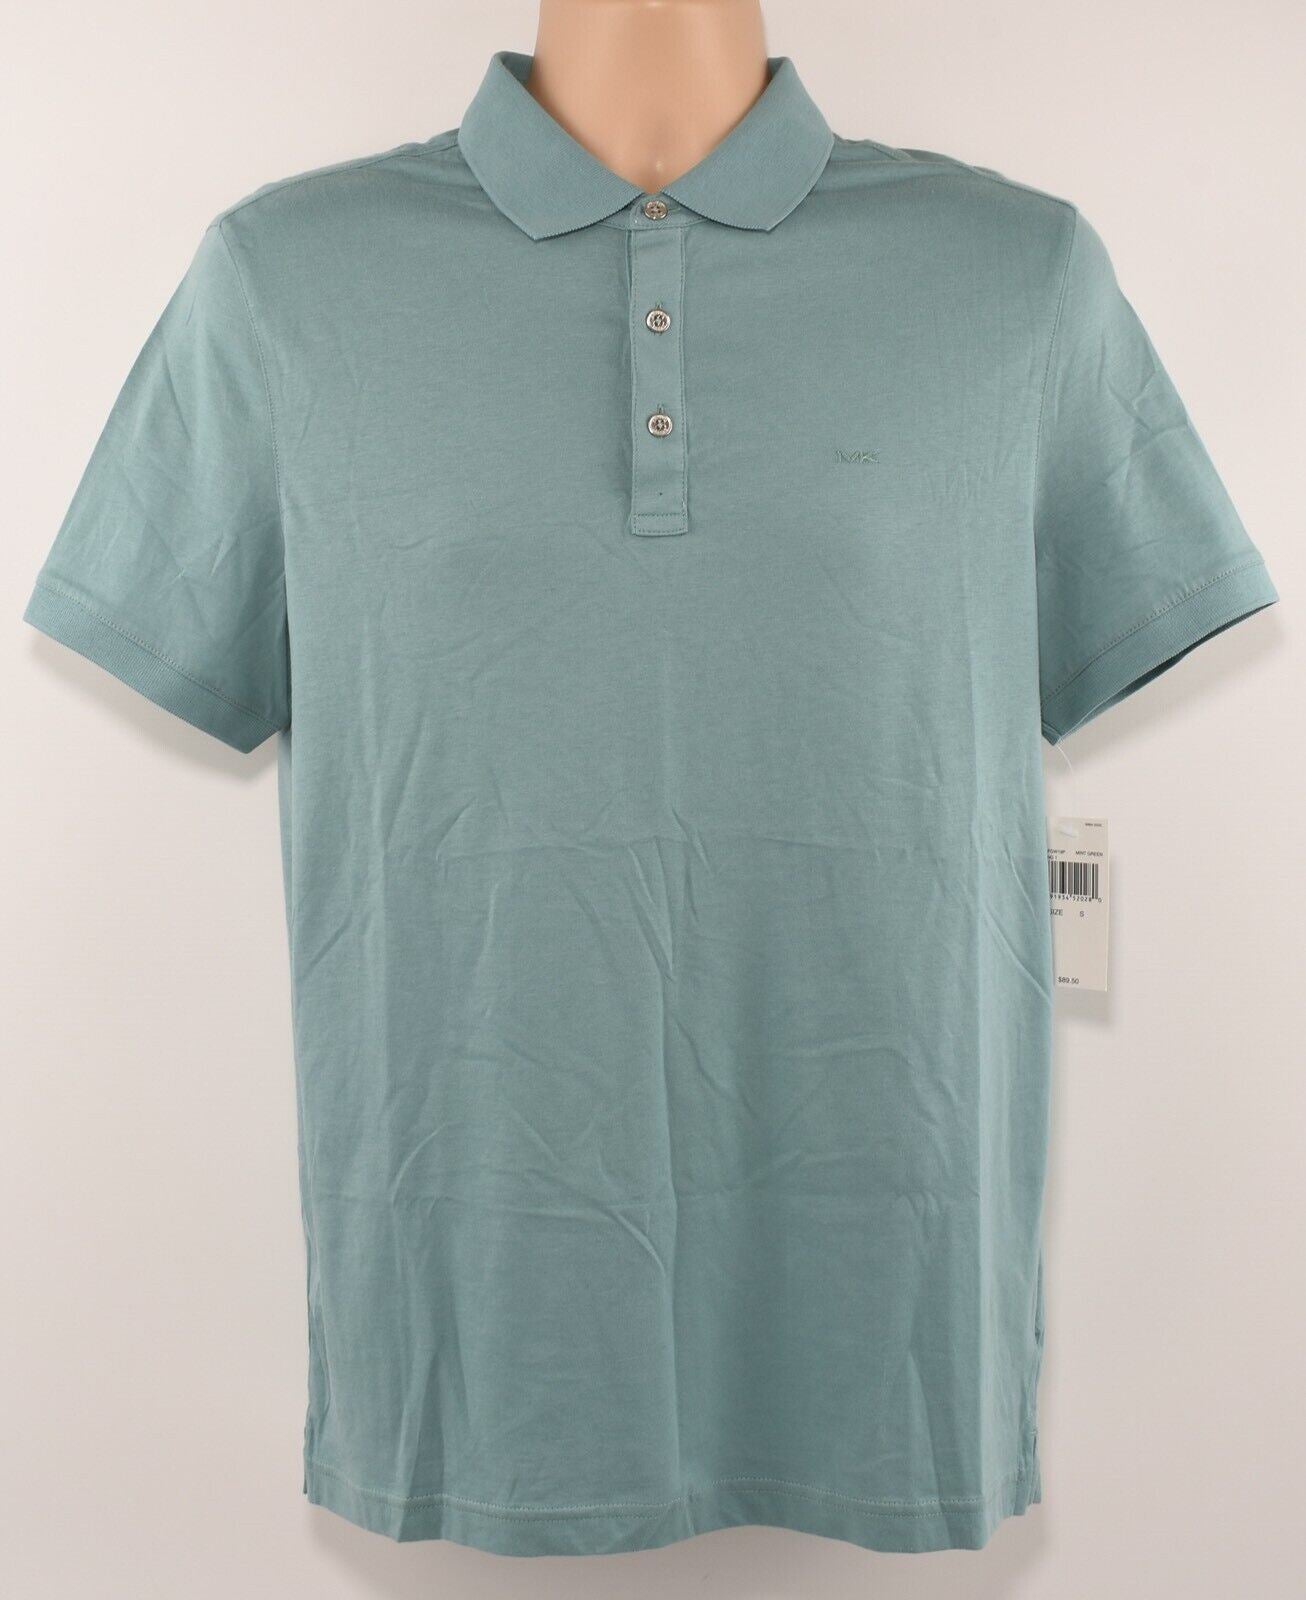 MICHAEL KORS Men's Soft Cotton Polo Shirt, Mint Green, size SMALL